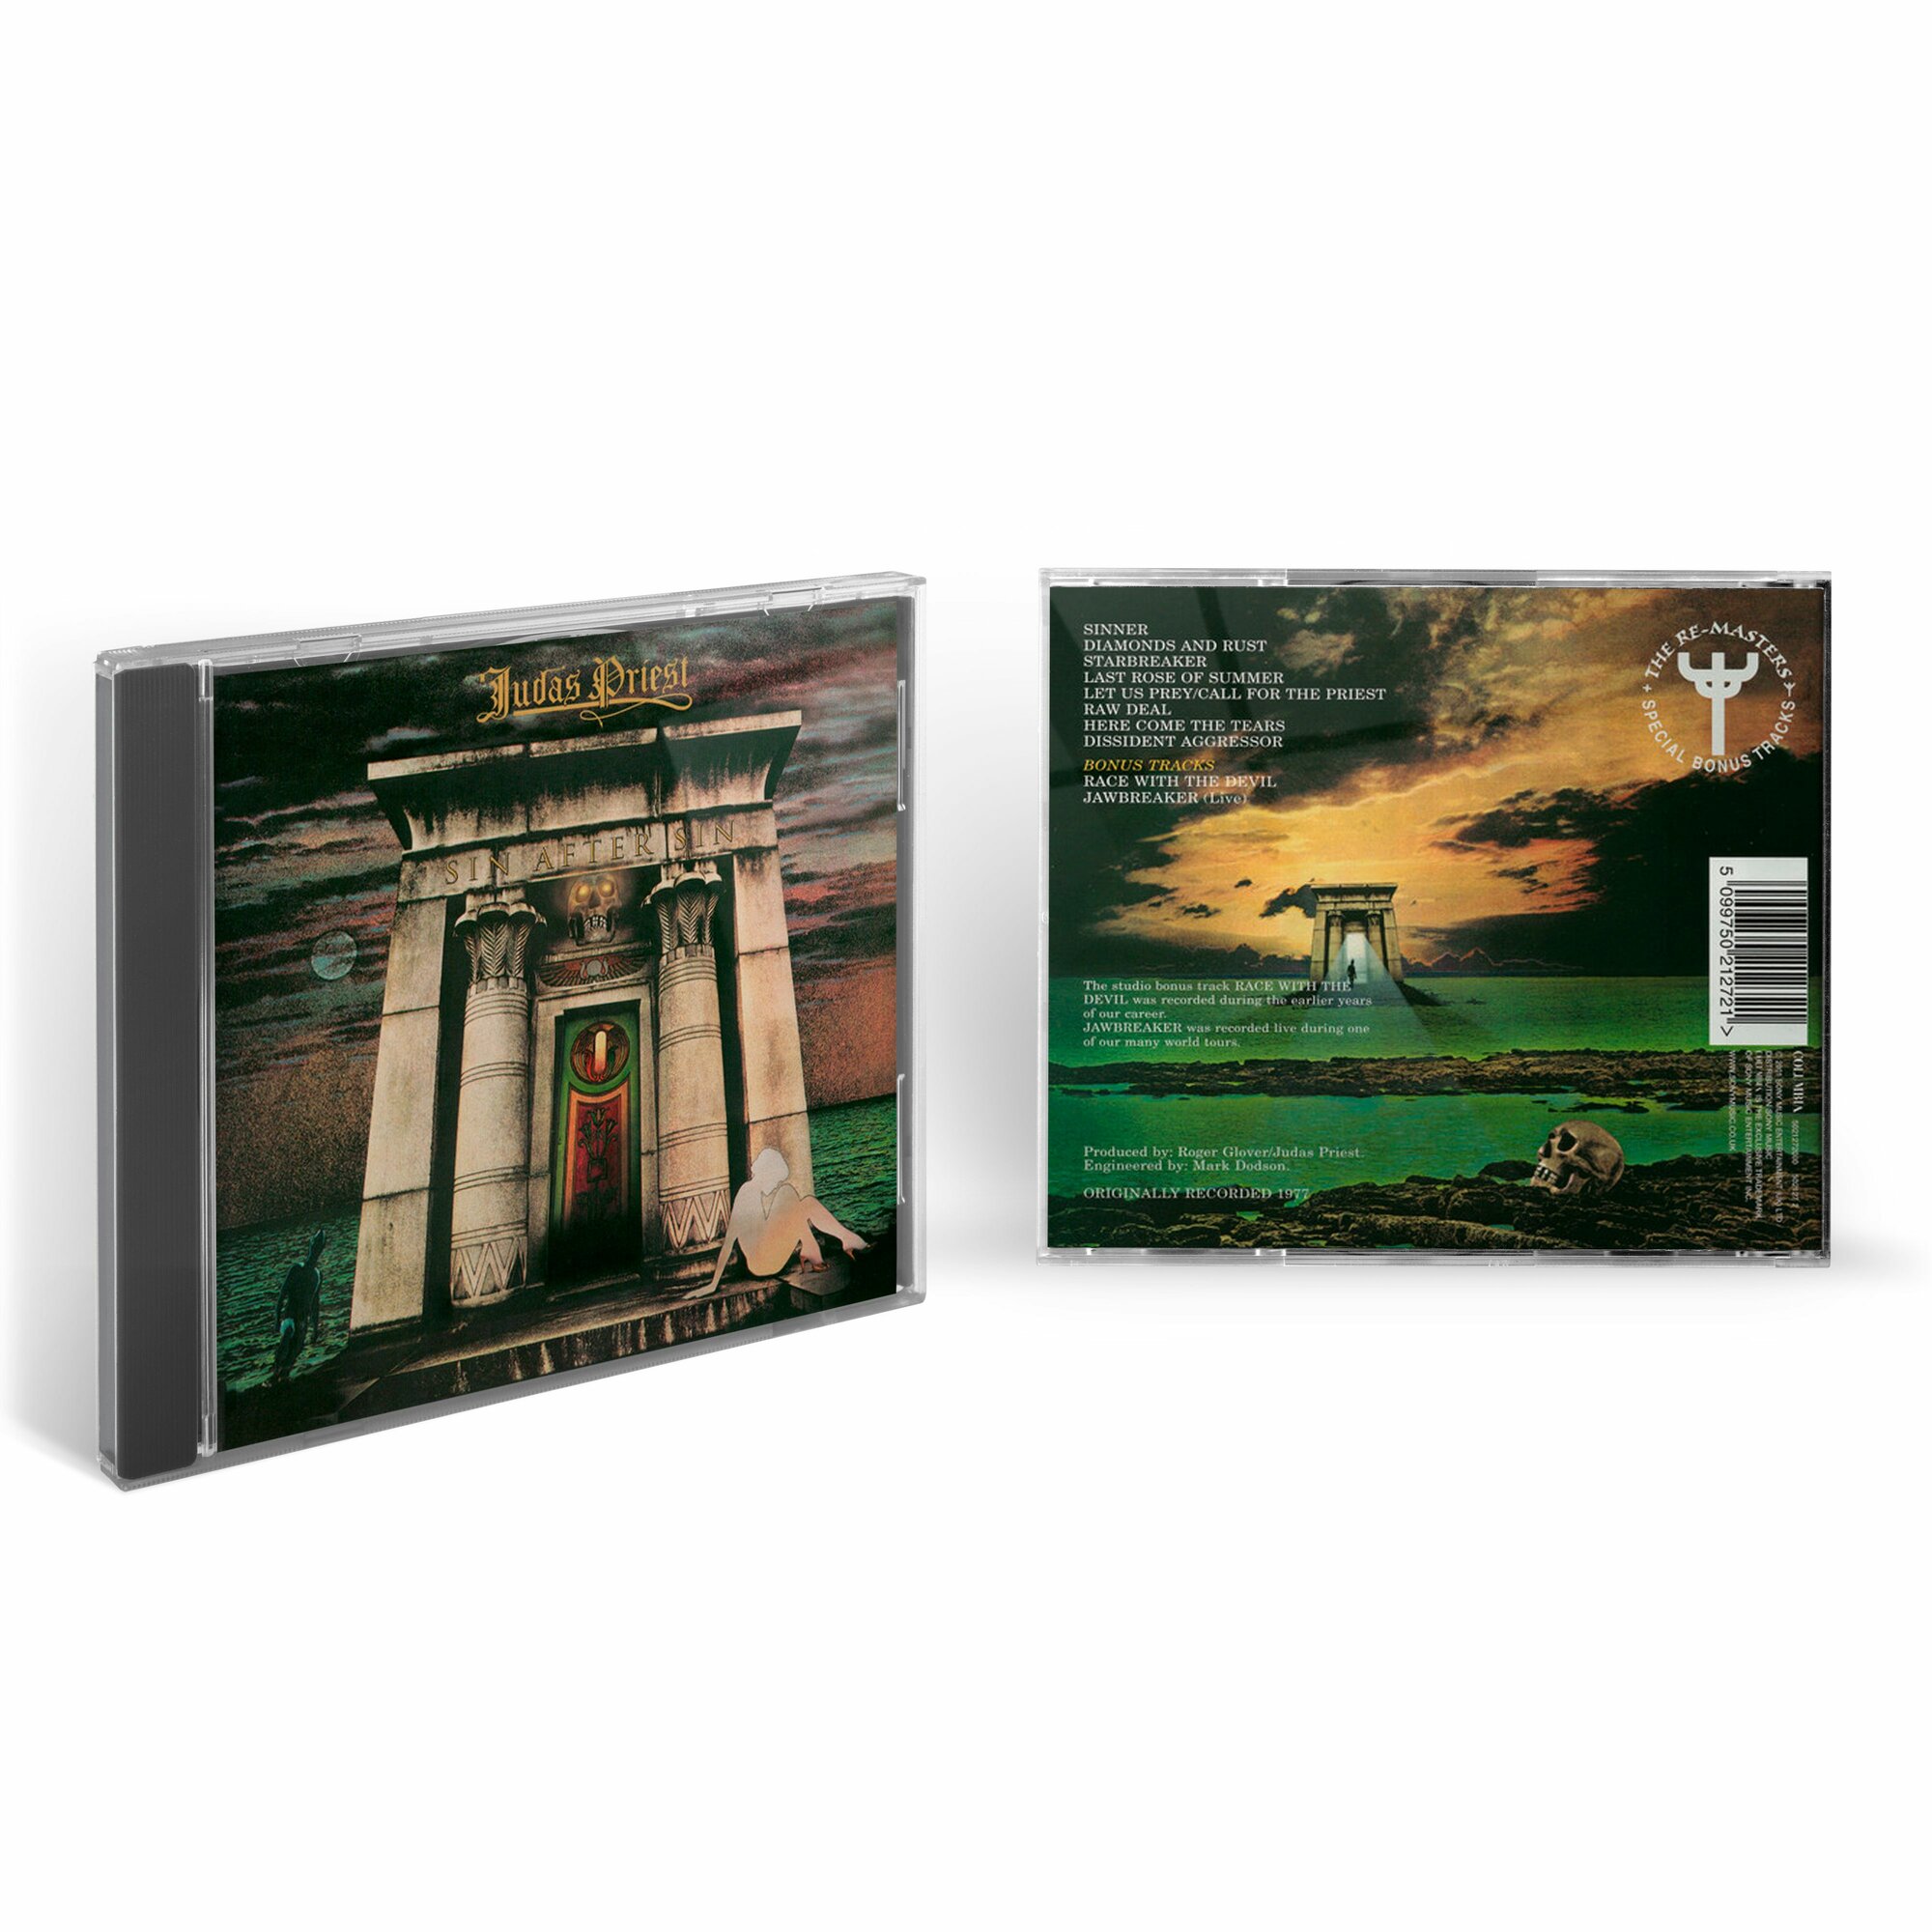 Judas Priest - Sin After Sin (1CD) 2001 Columbia Jewel Аудио диск